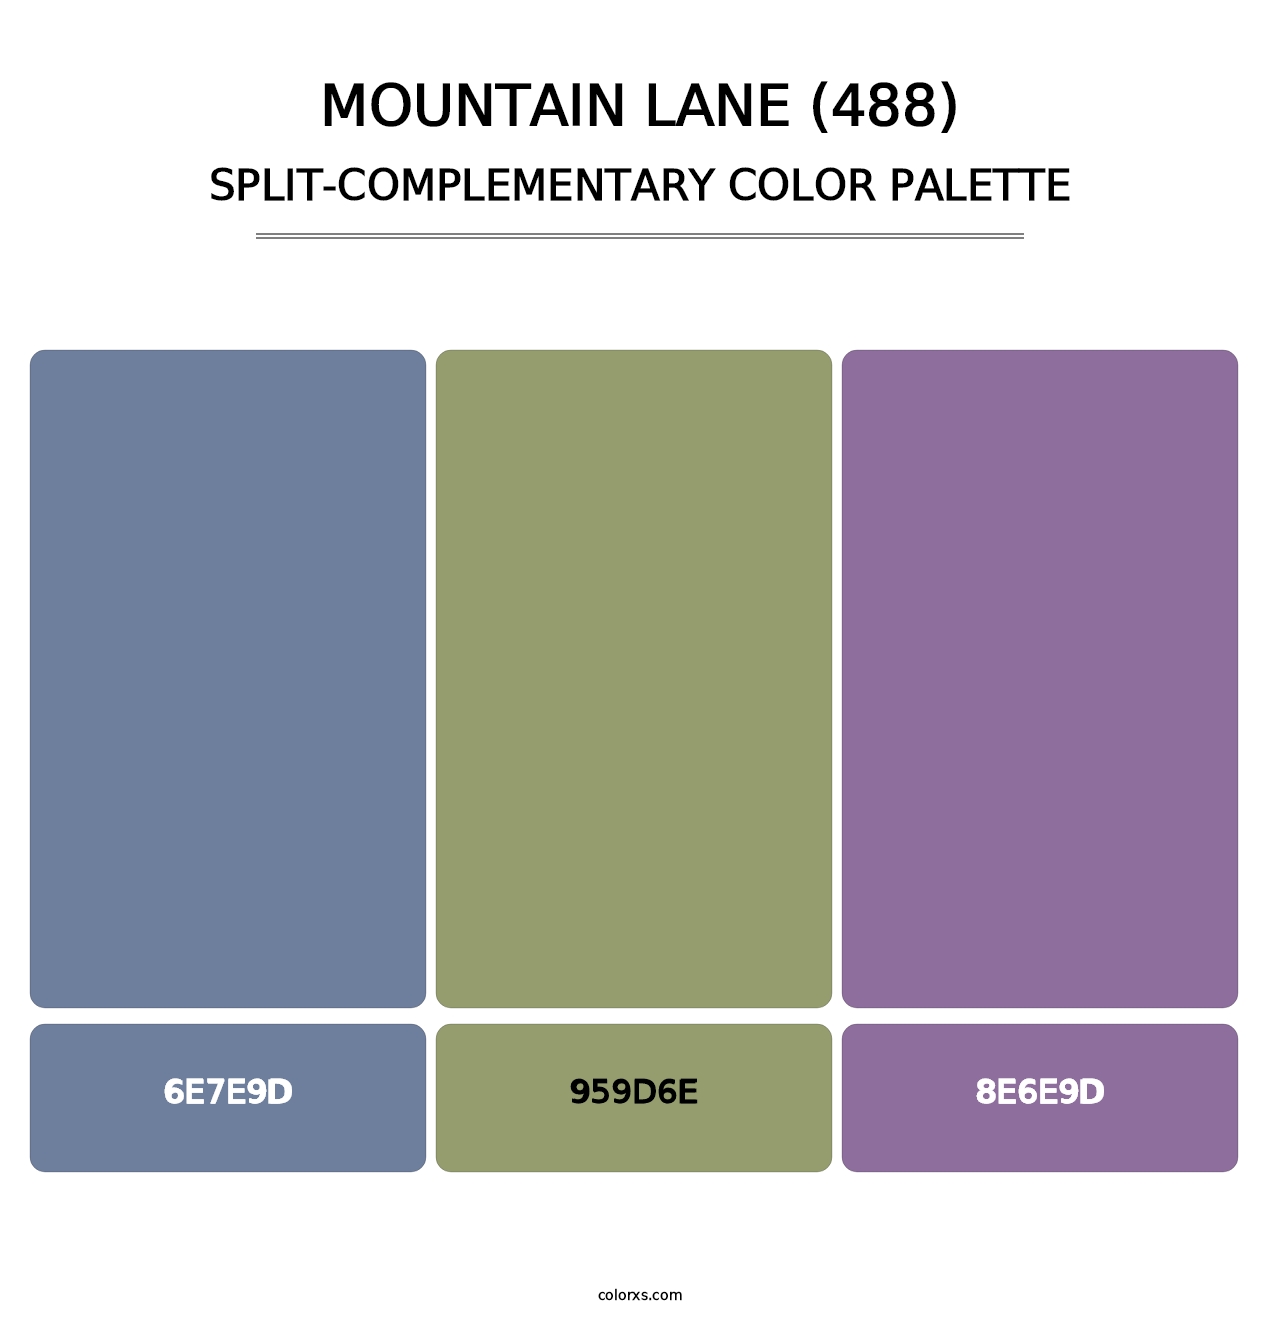 Mountain Lane (488) - Split-Complementary Color Palette